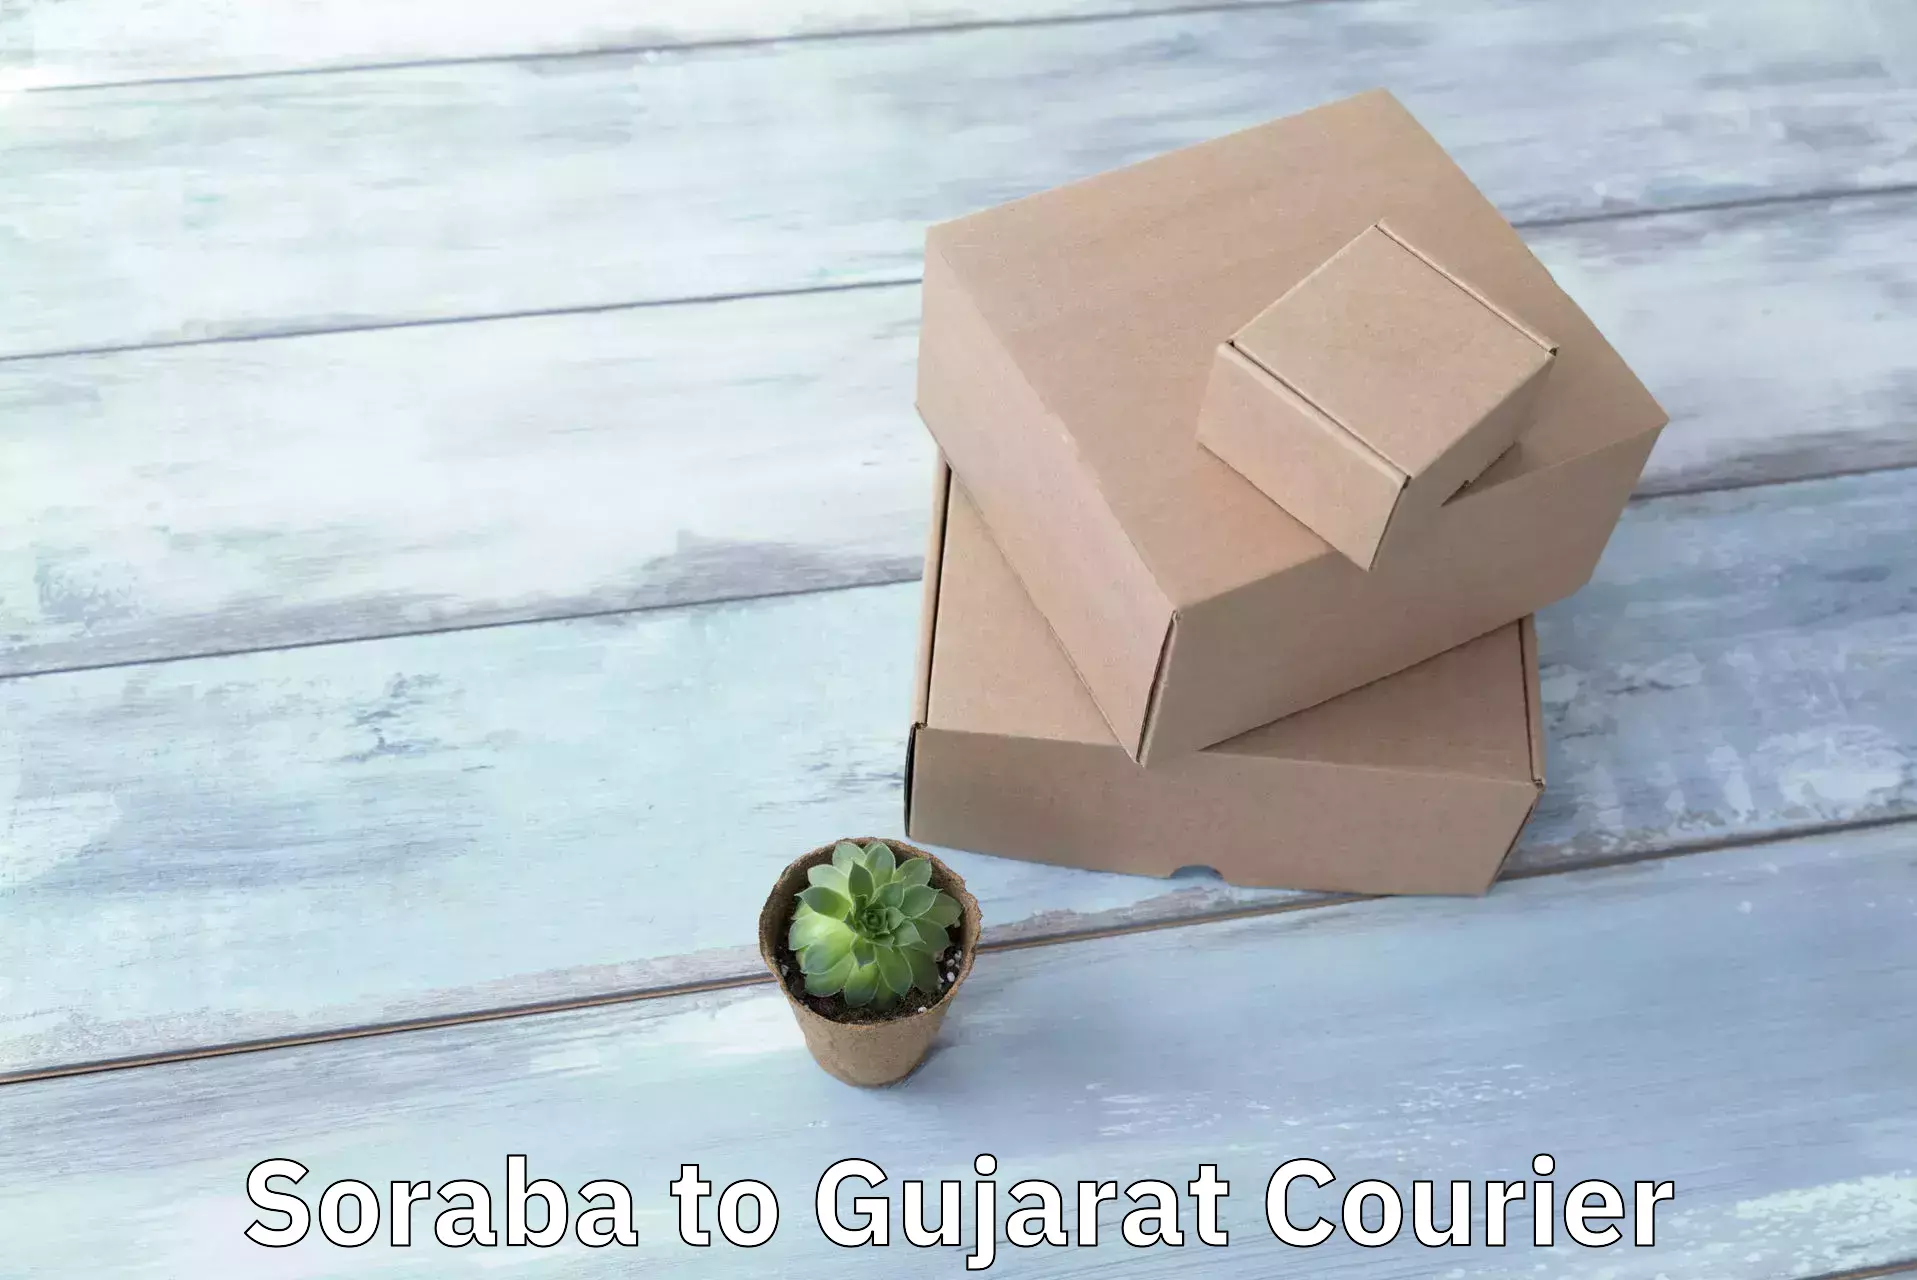 Courier service partnerships Soraba to Patan Gujarat